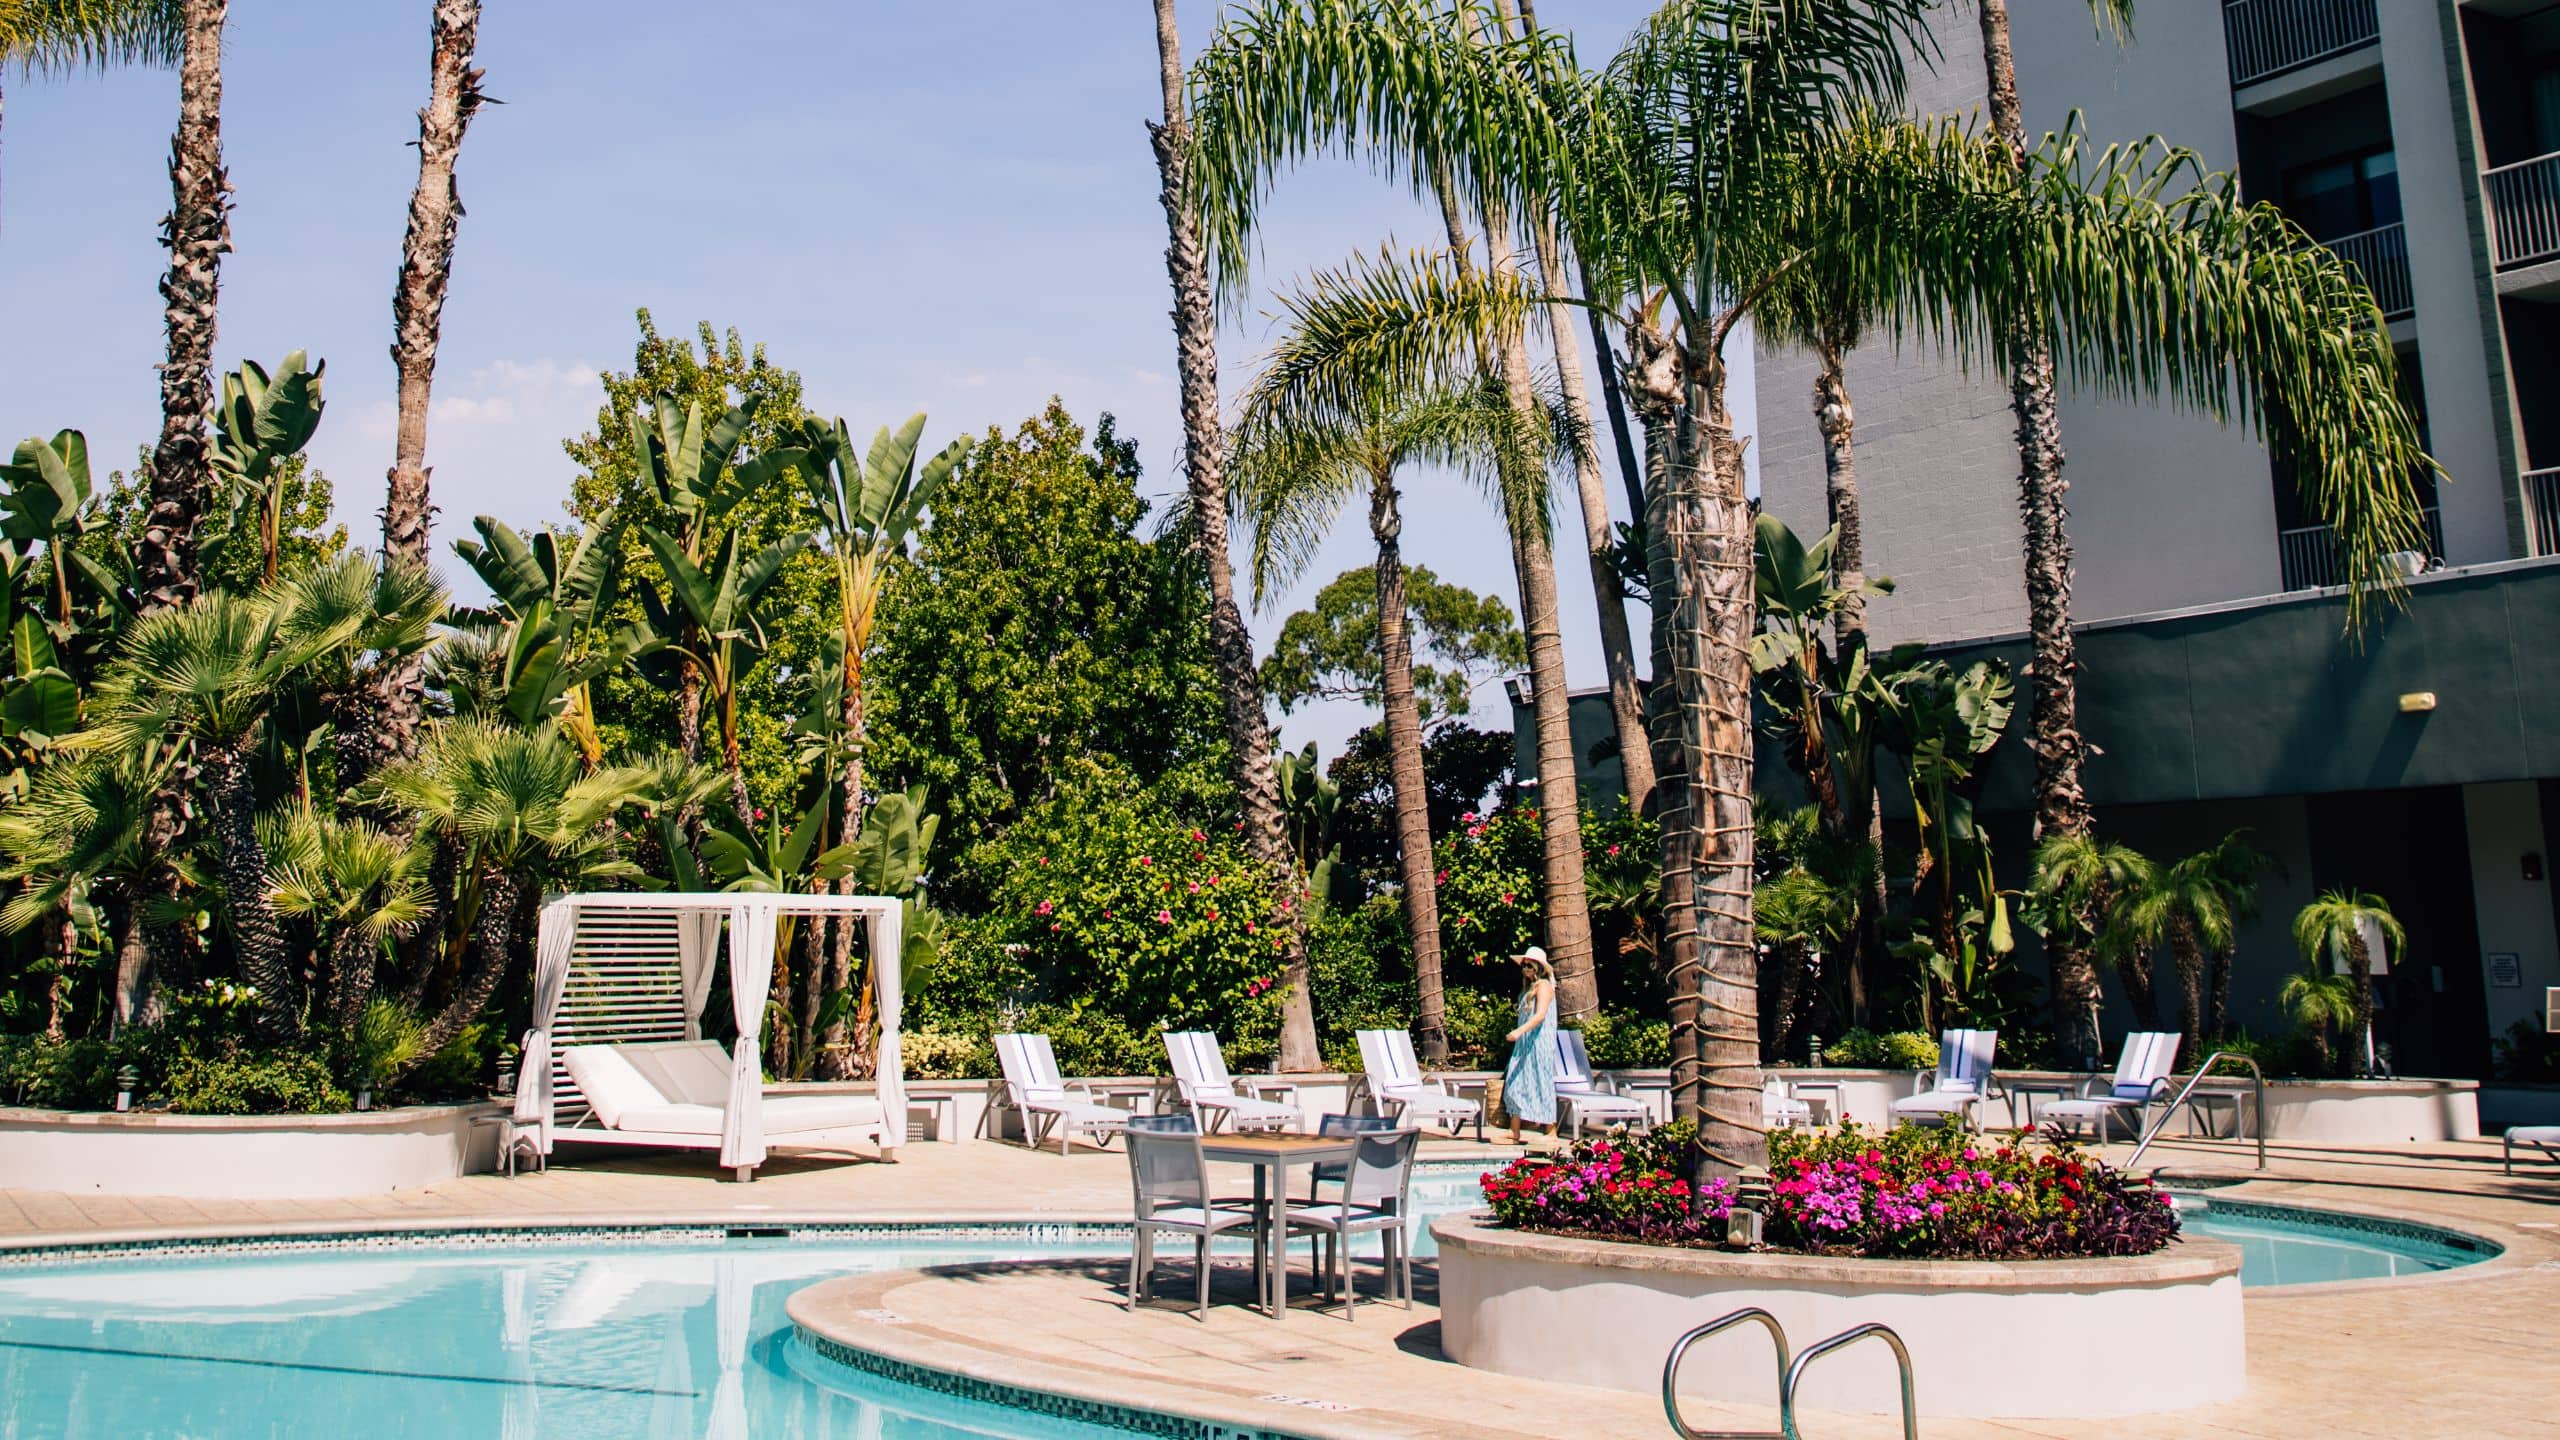 Island Hotel Newport Beach, California Luxury Hotel